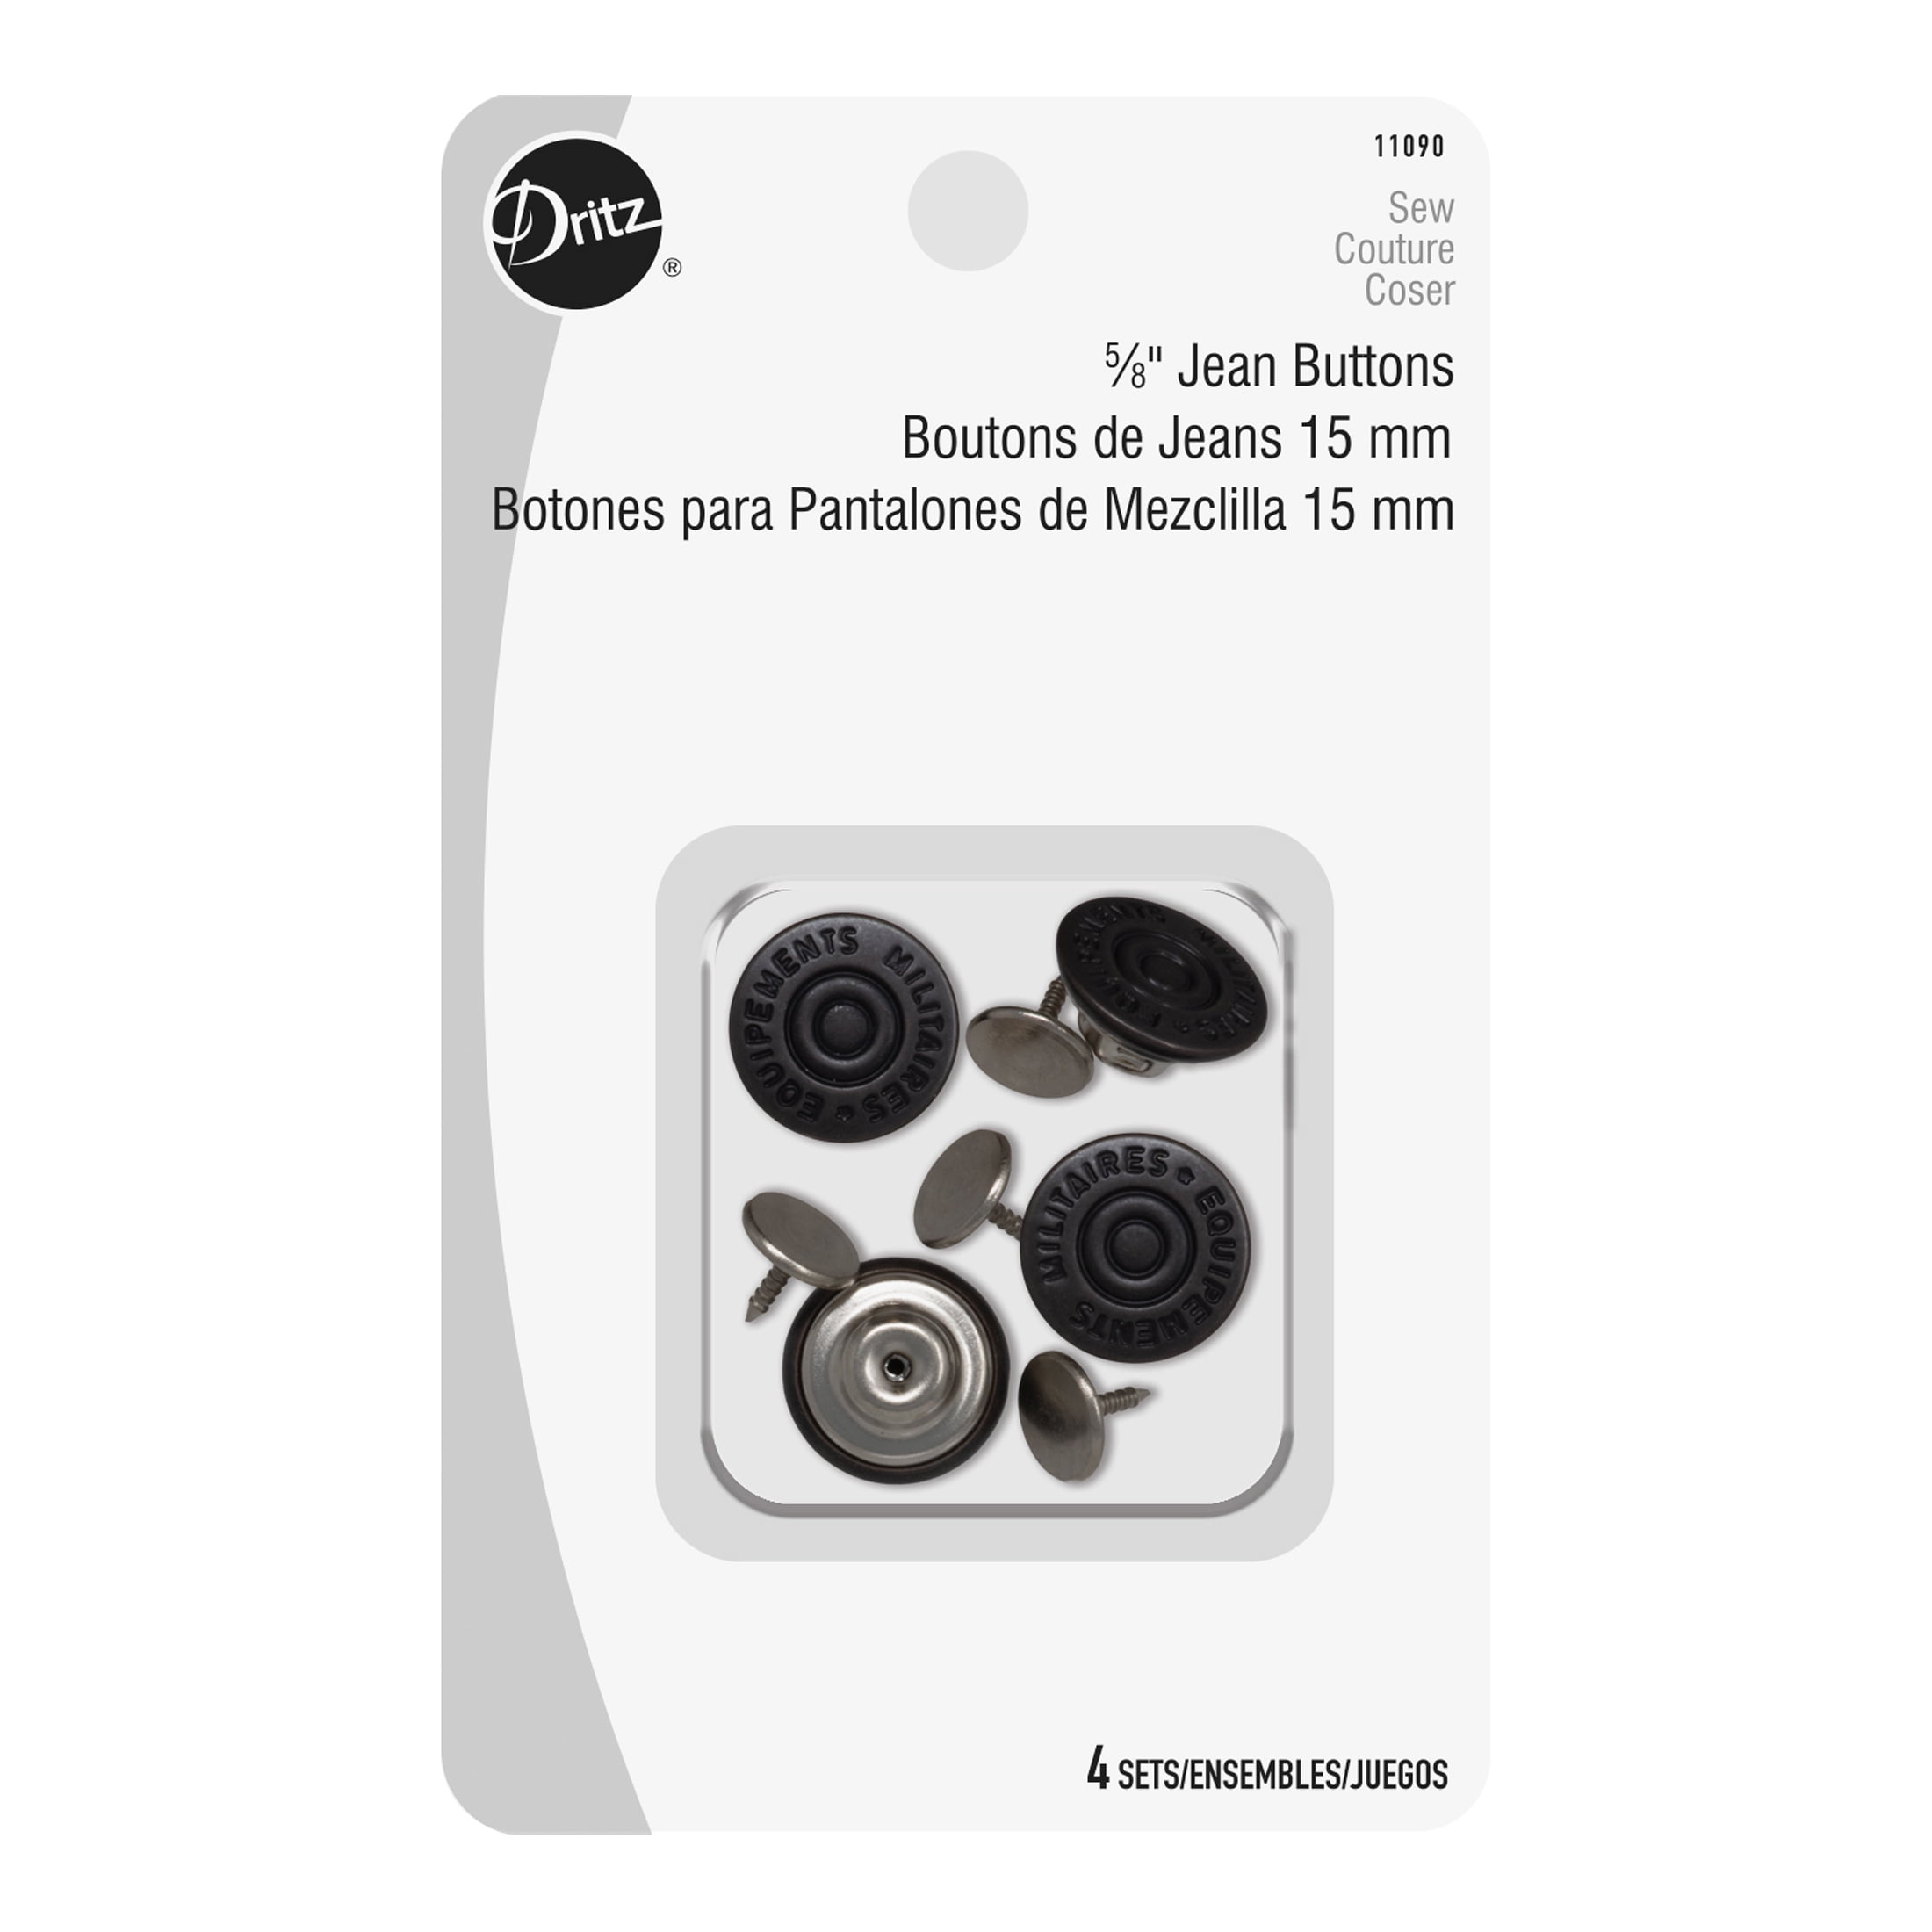 Dritz 5/8 inch Jean Buttons, 11090